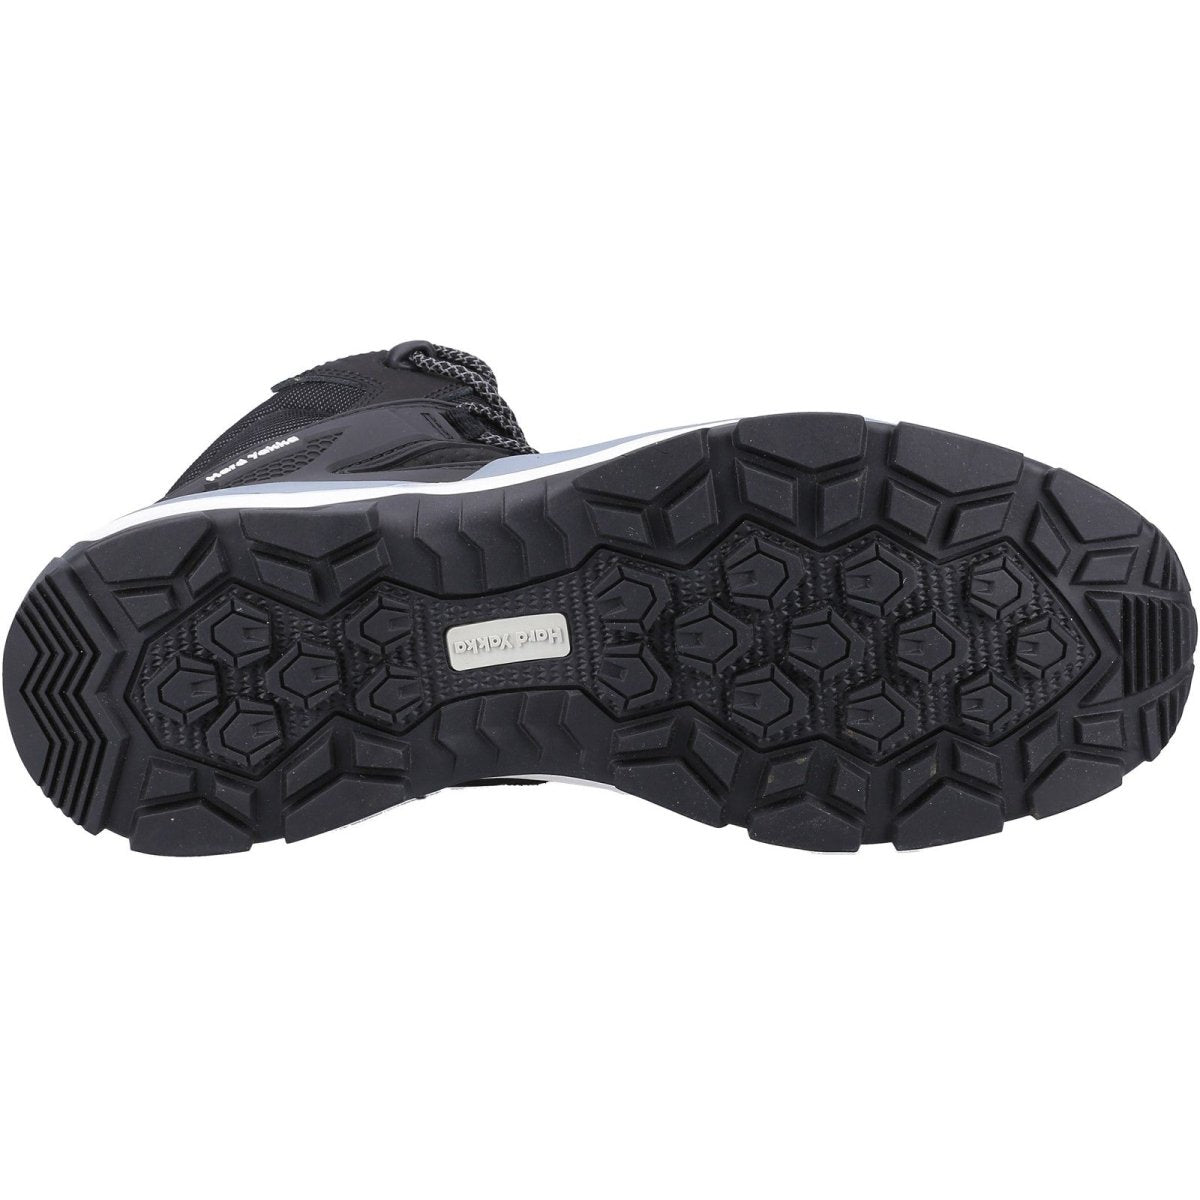 Hard Yakka Atomic PR Hybrid Side Zip Safety Boots - Shoe Store Direct